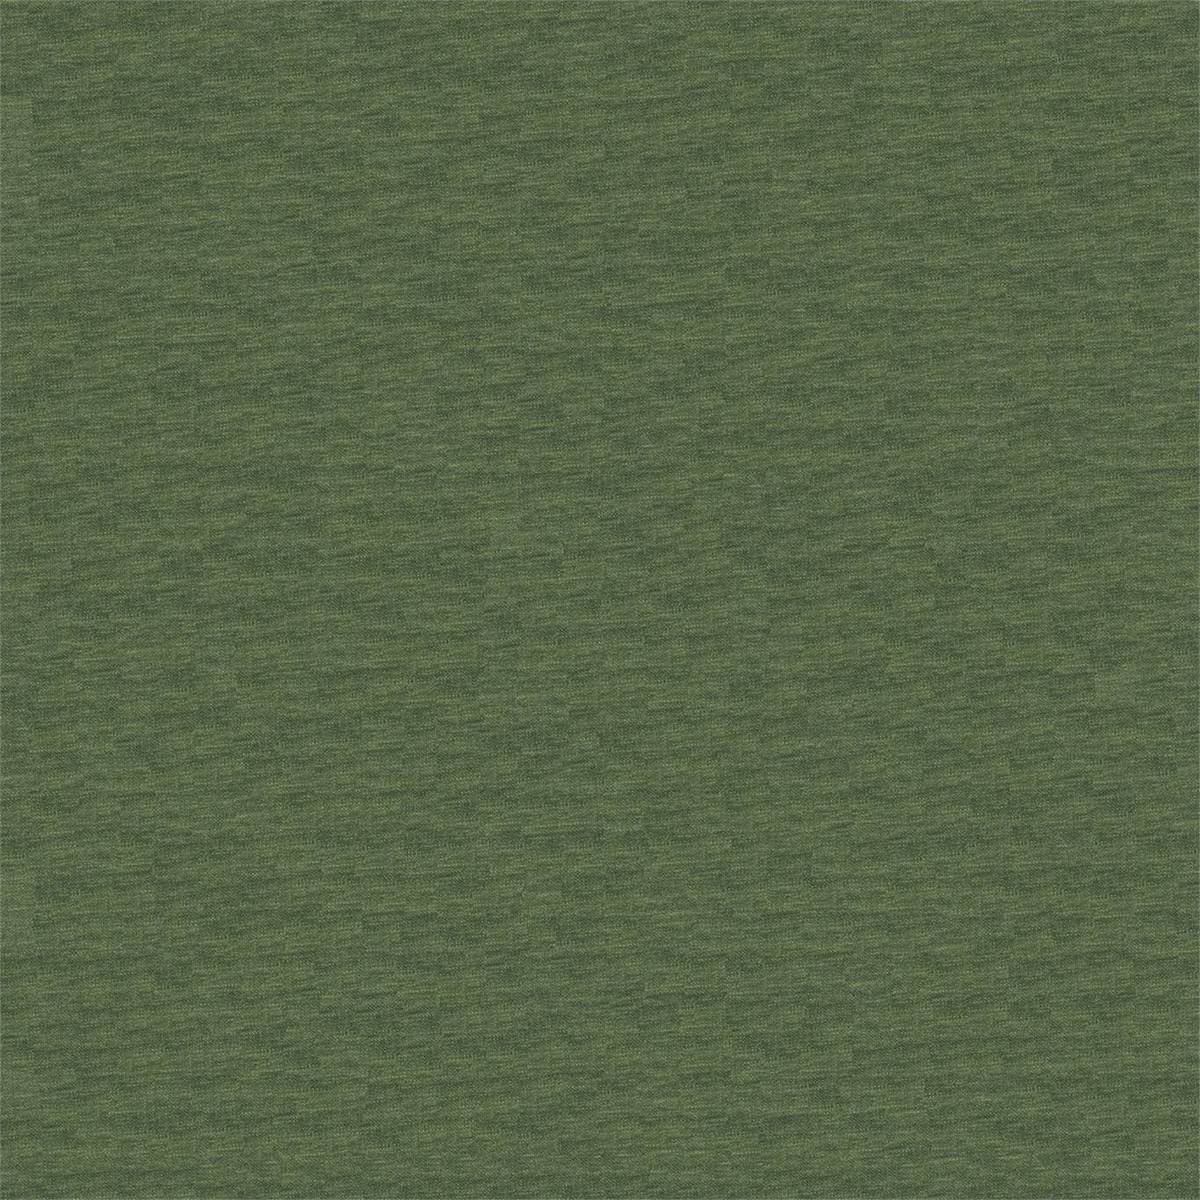 Esala Plains Juniper Fabric by Scion